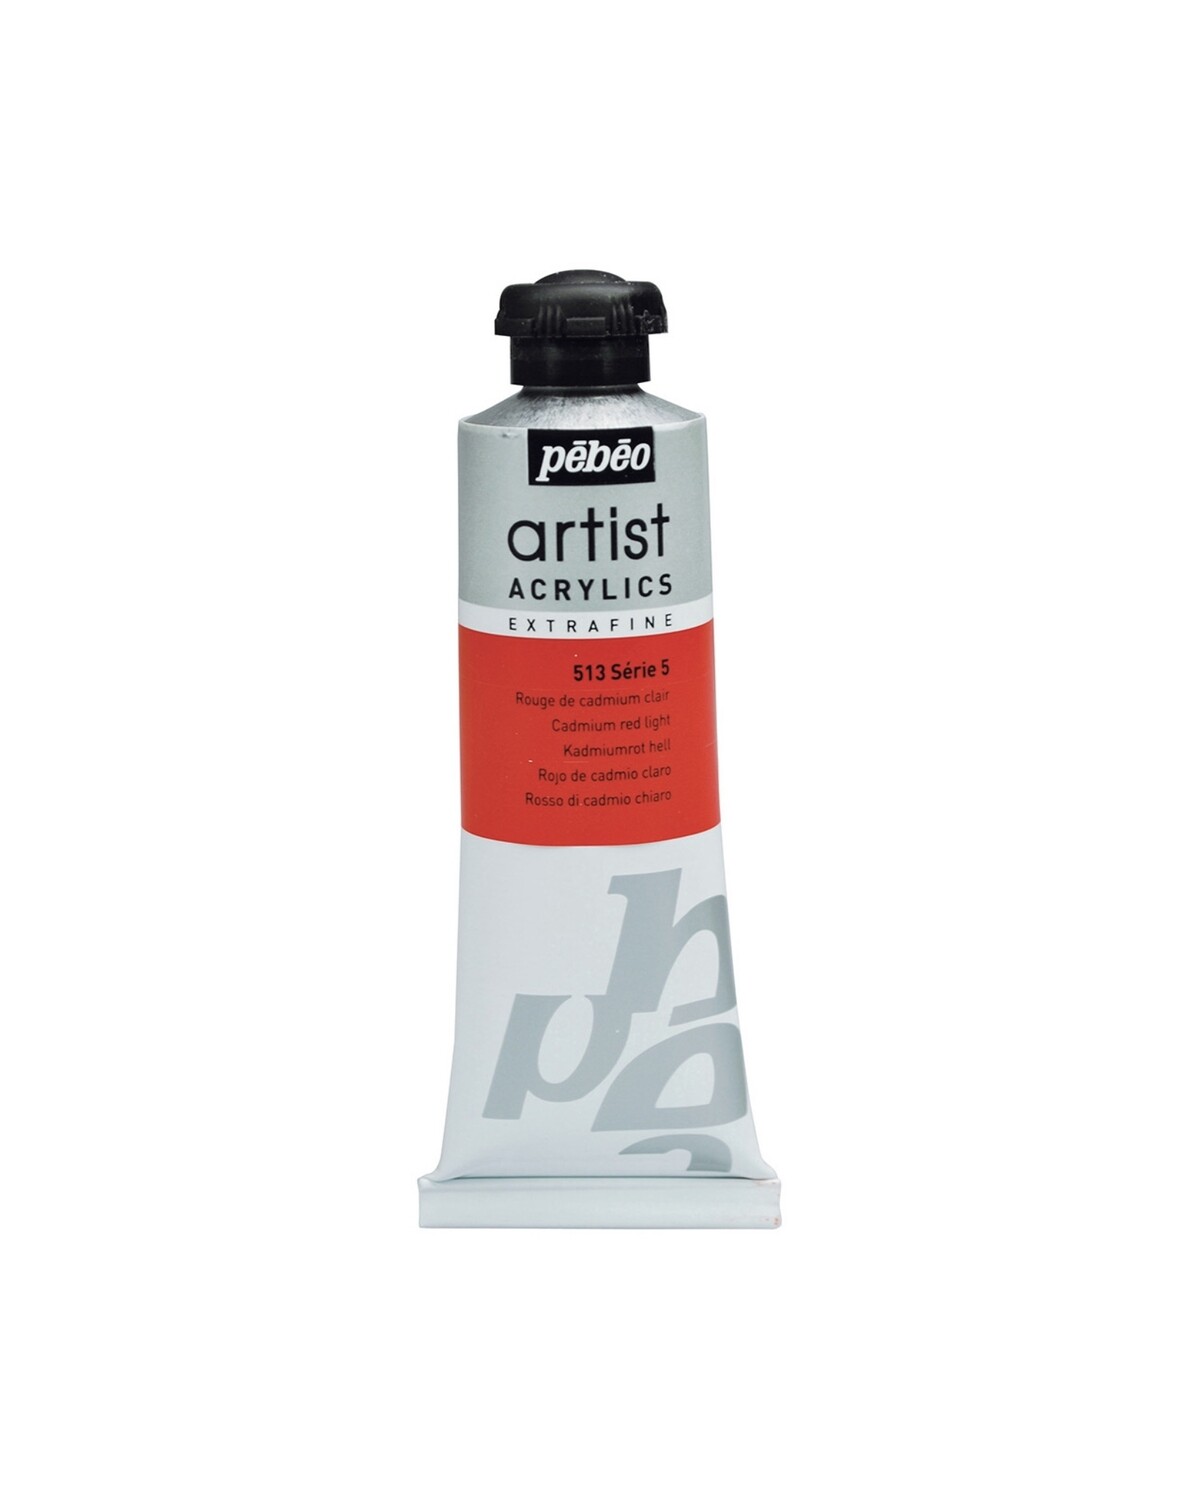 EXTRA FINE ARTIST ACRYLICS, Light cadmium red, No. 513, Series 5, 60 ml